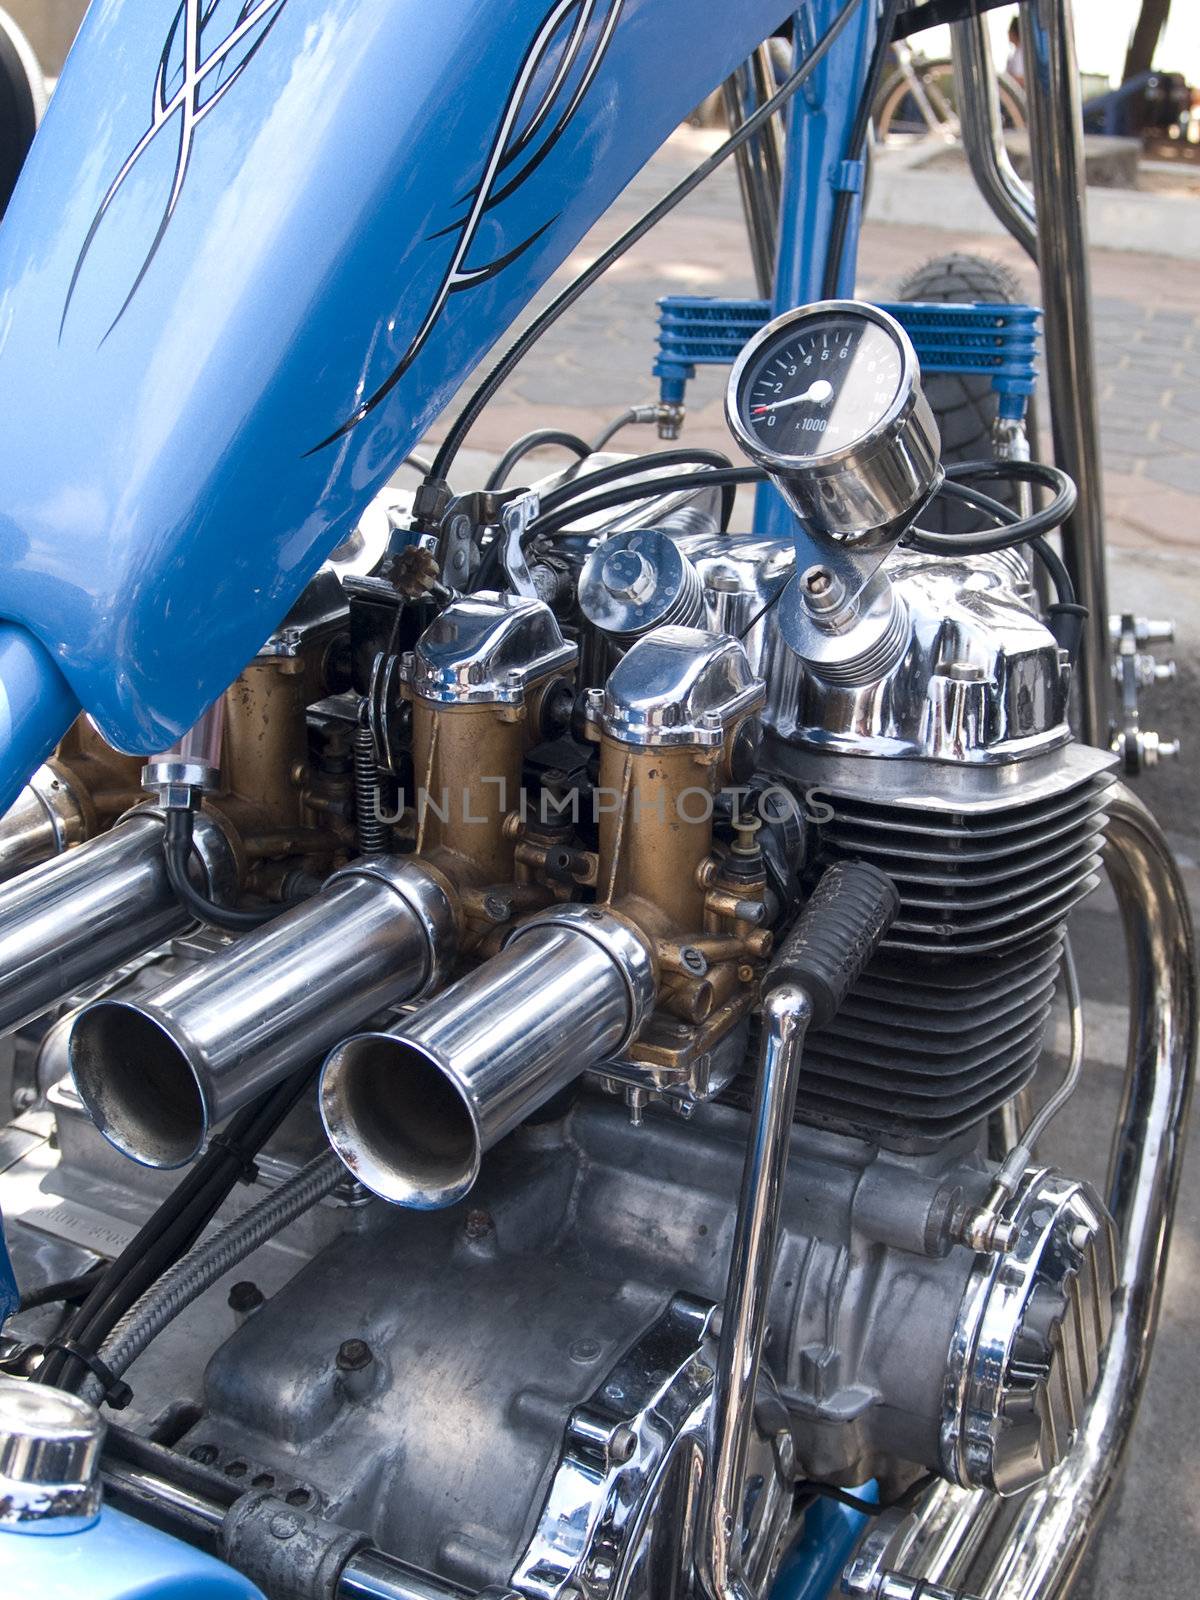 Engine detail and carburetor of custom built chopper motorcycle